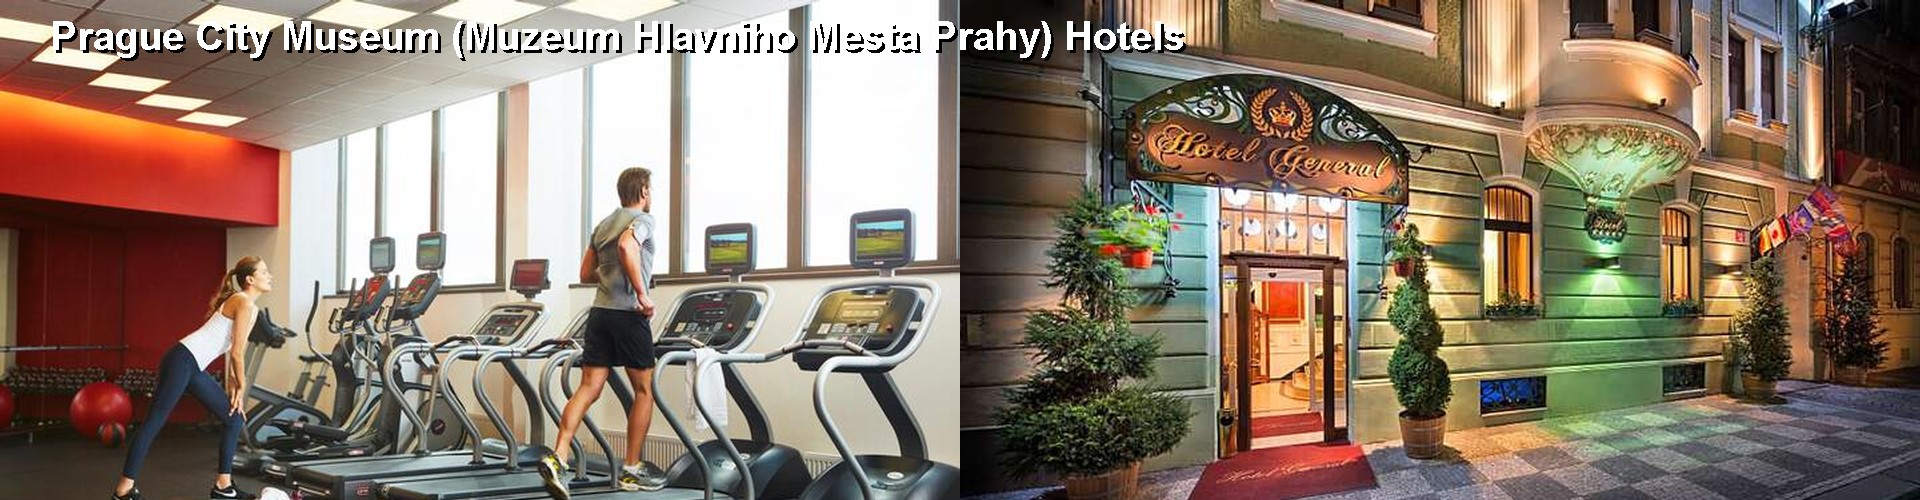 5 Best Hotels near Prague City Museum (Muzeum Hlavniho Mesta Prahy)